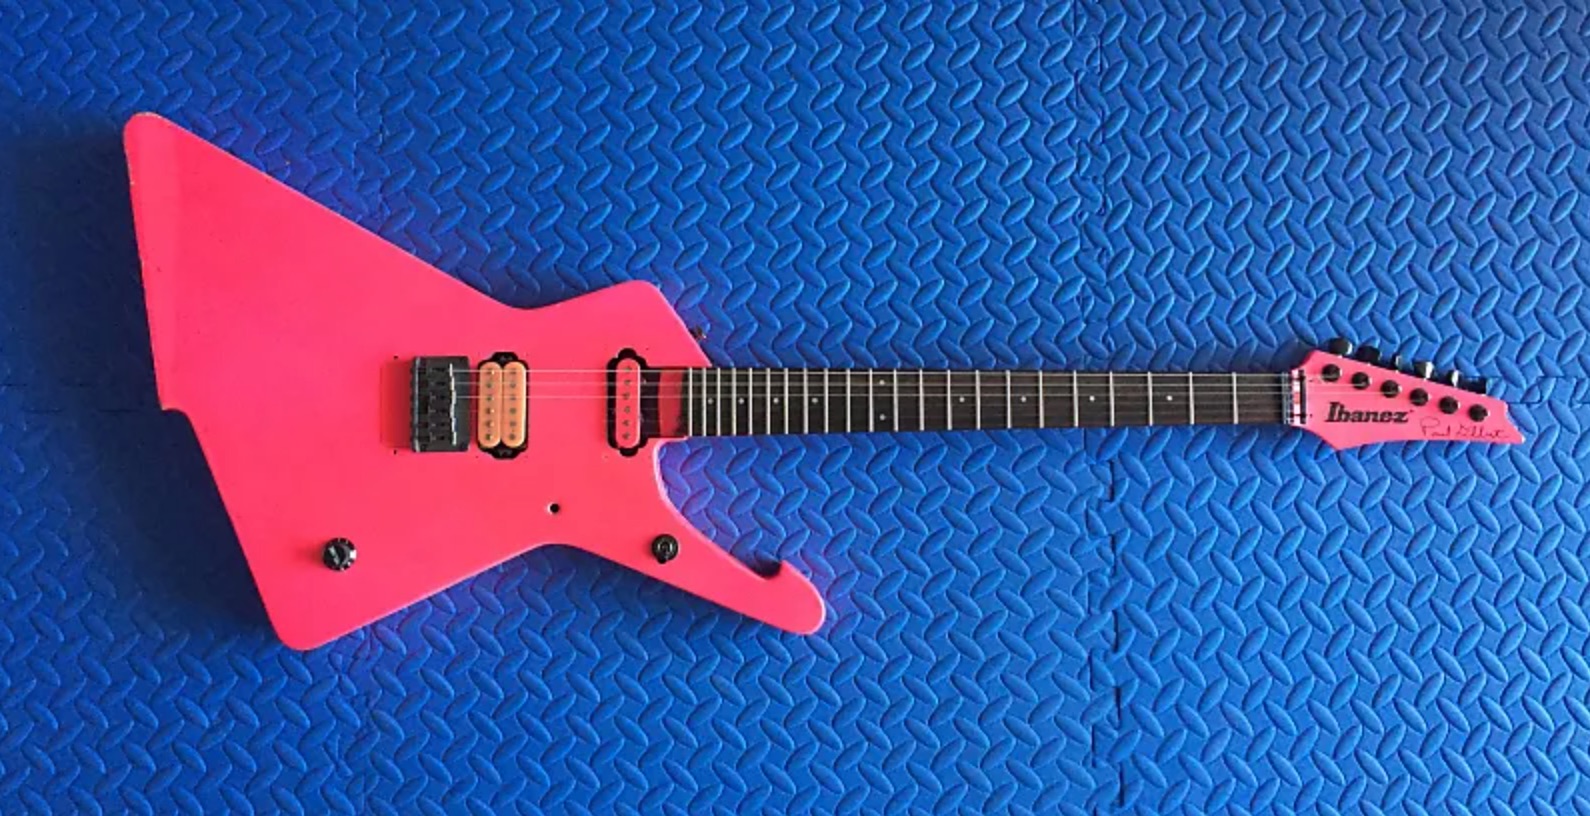 Paul Gilbert's hot-pink 1987 Ibanez “Ice-Stroyer” guitar has been 